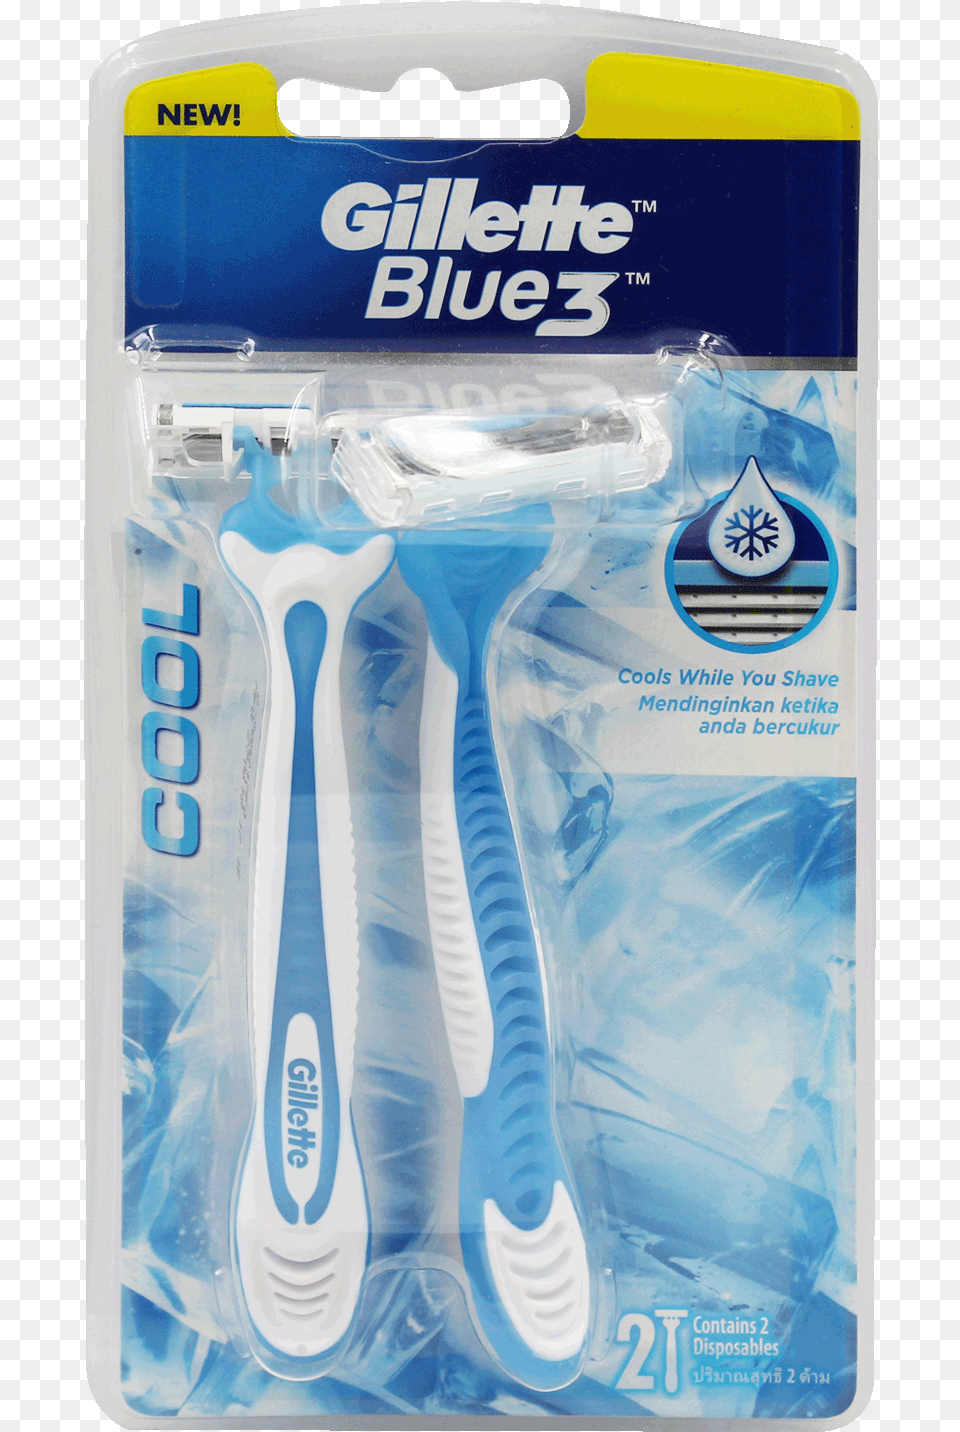 Gillette Blue 3 Disposable, Blade, Weapon, Razor, Brush Png Image